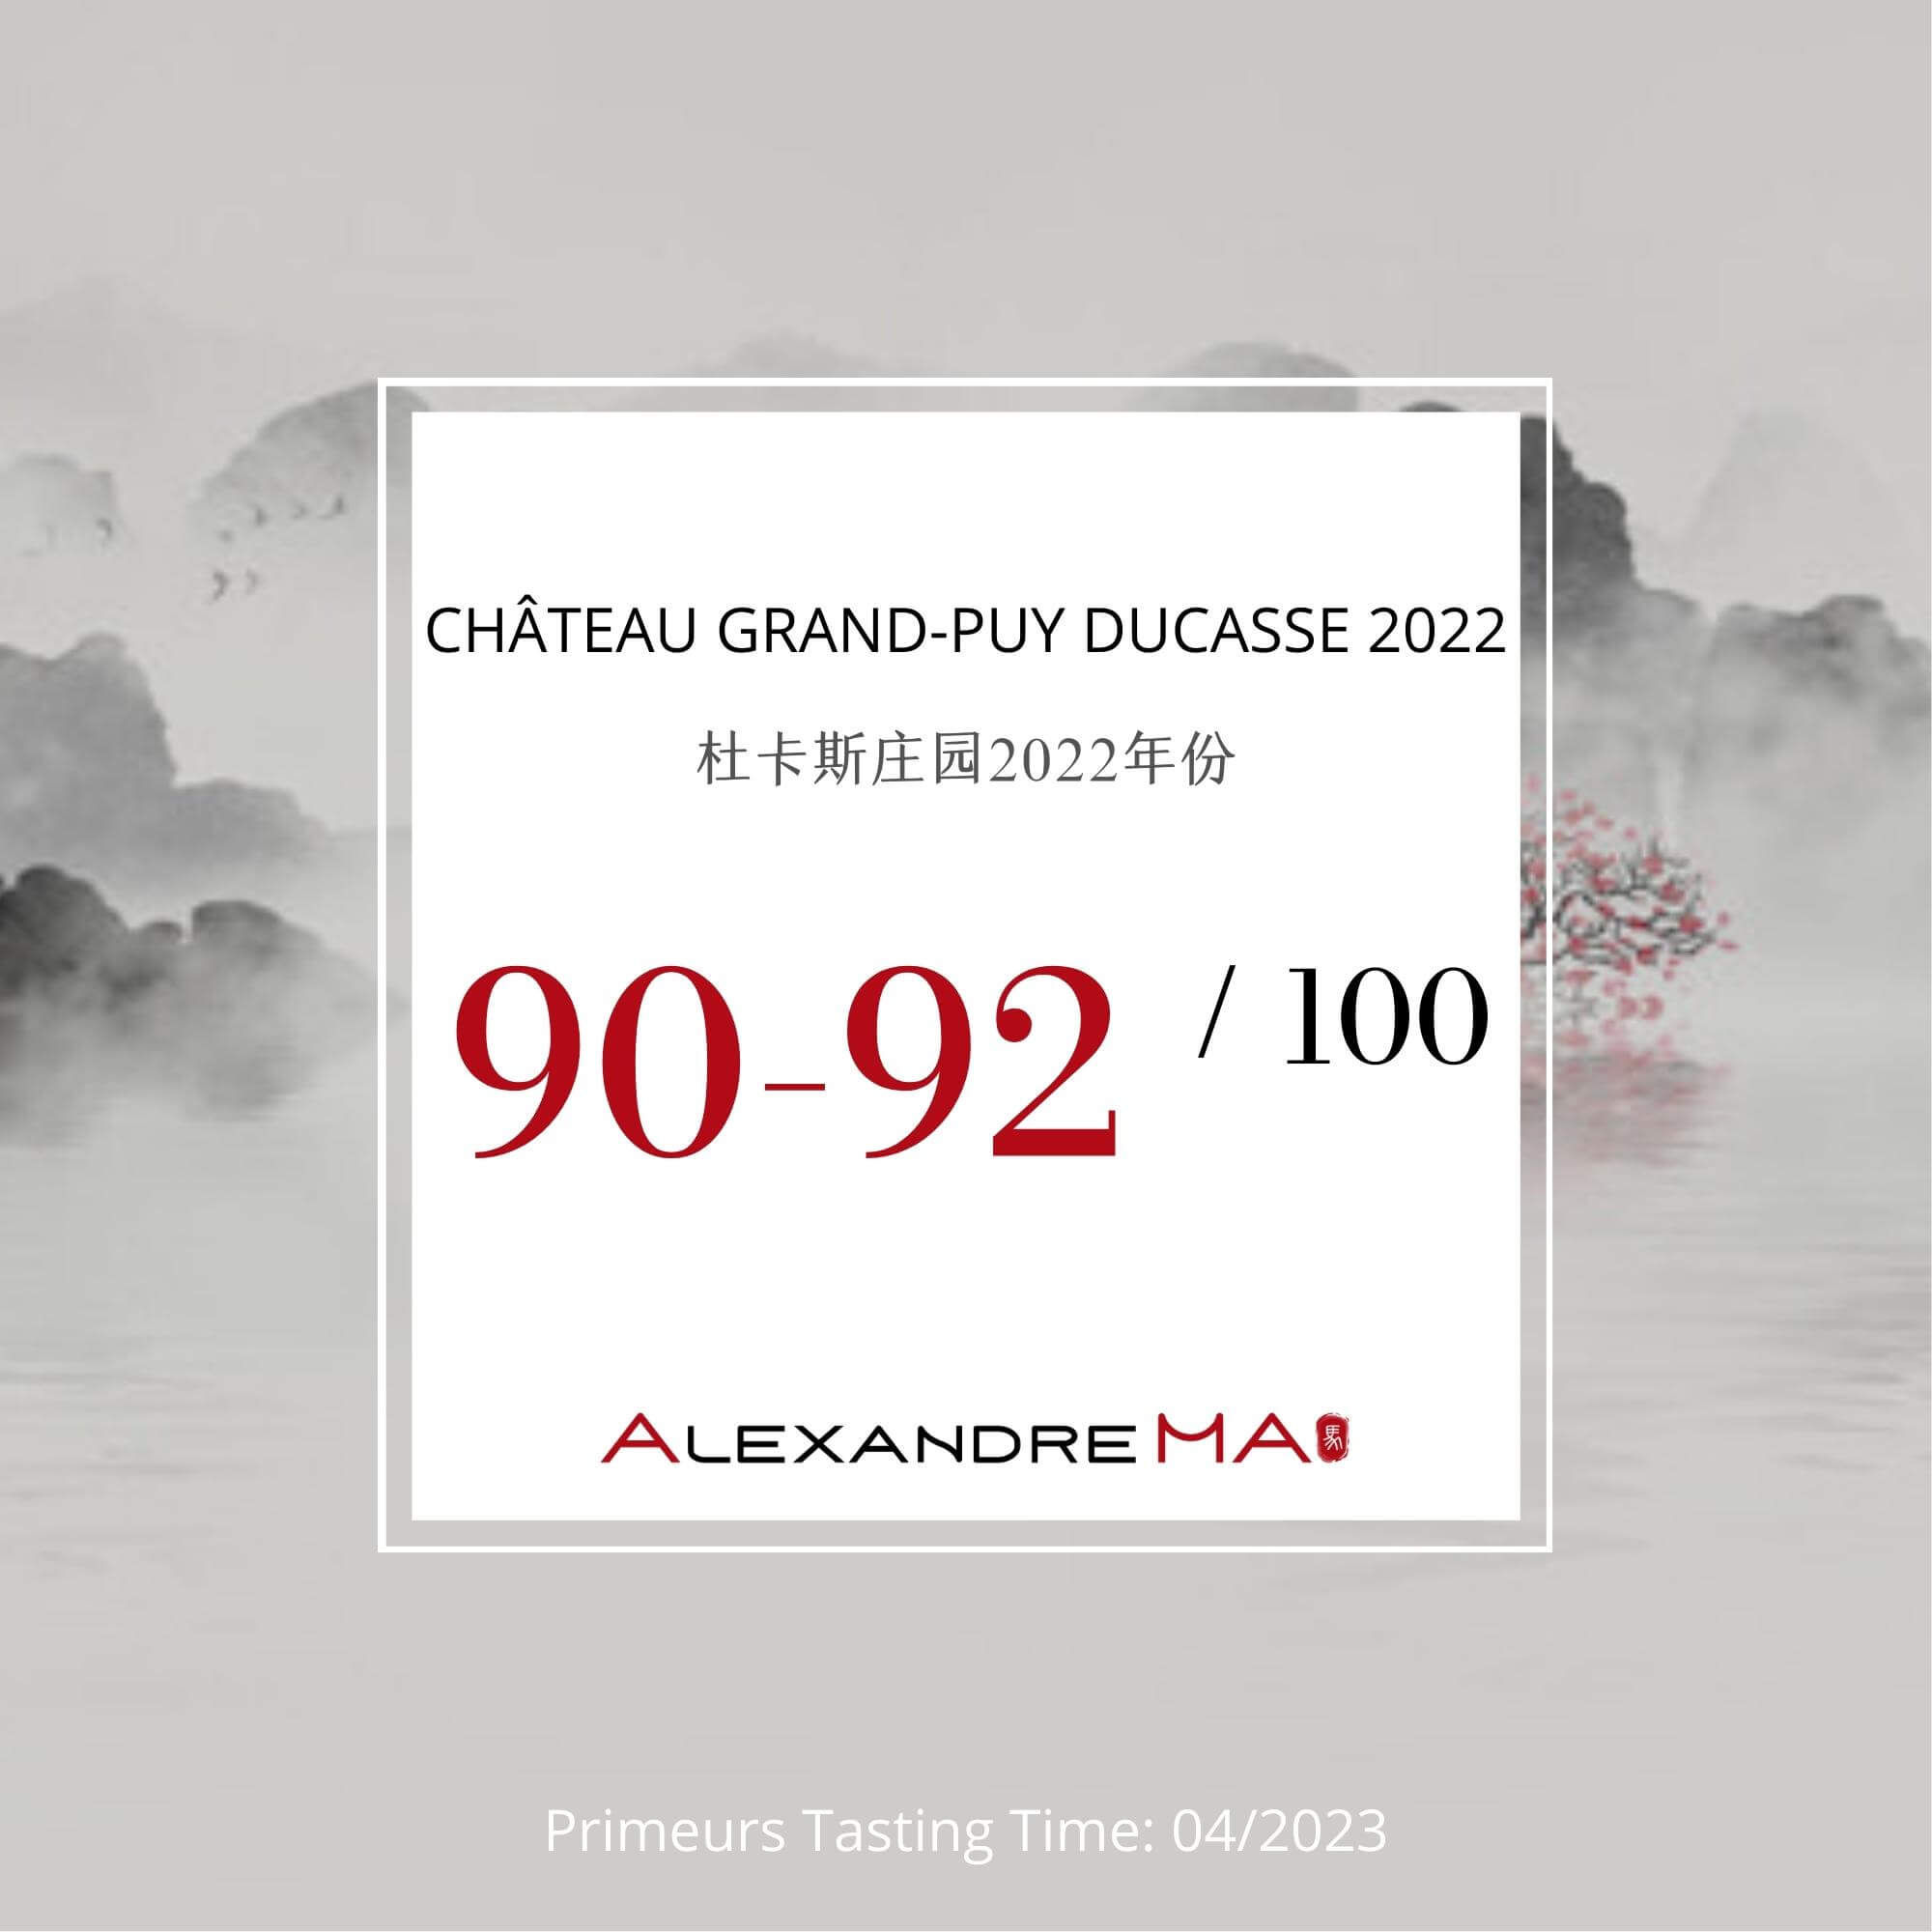 Château Grand-Puy Ducasse 2022 Primeurs - Alexandre MA